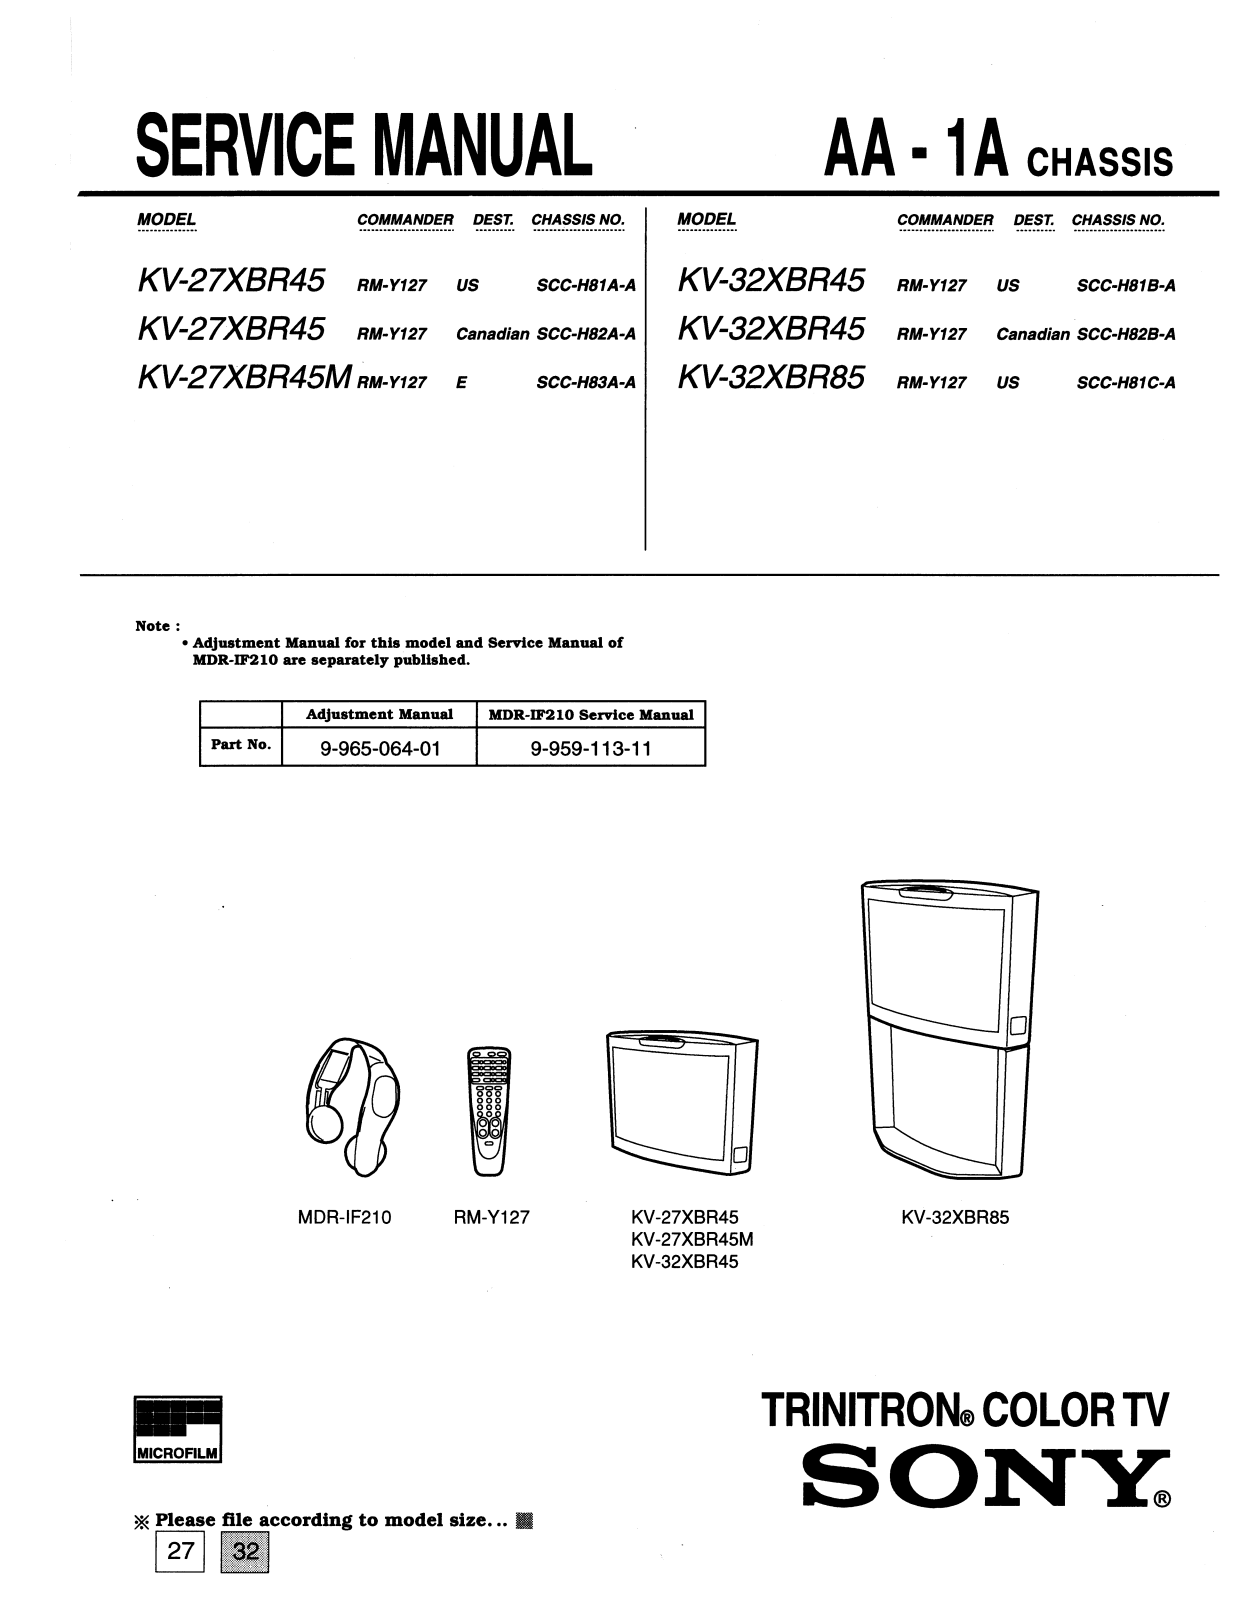 Sony kv27xbr45 schematic